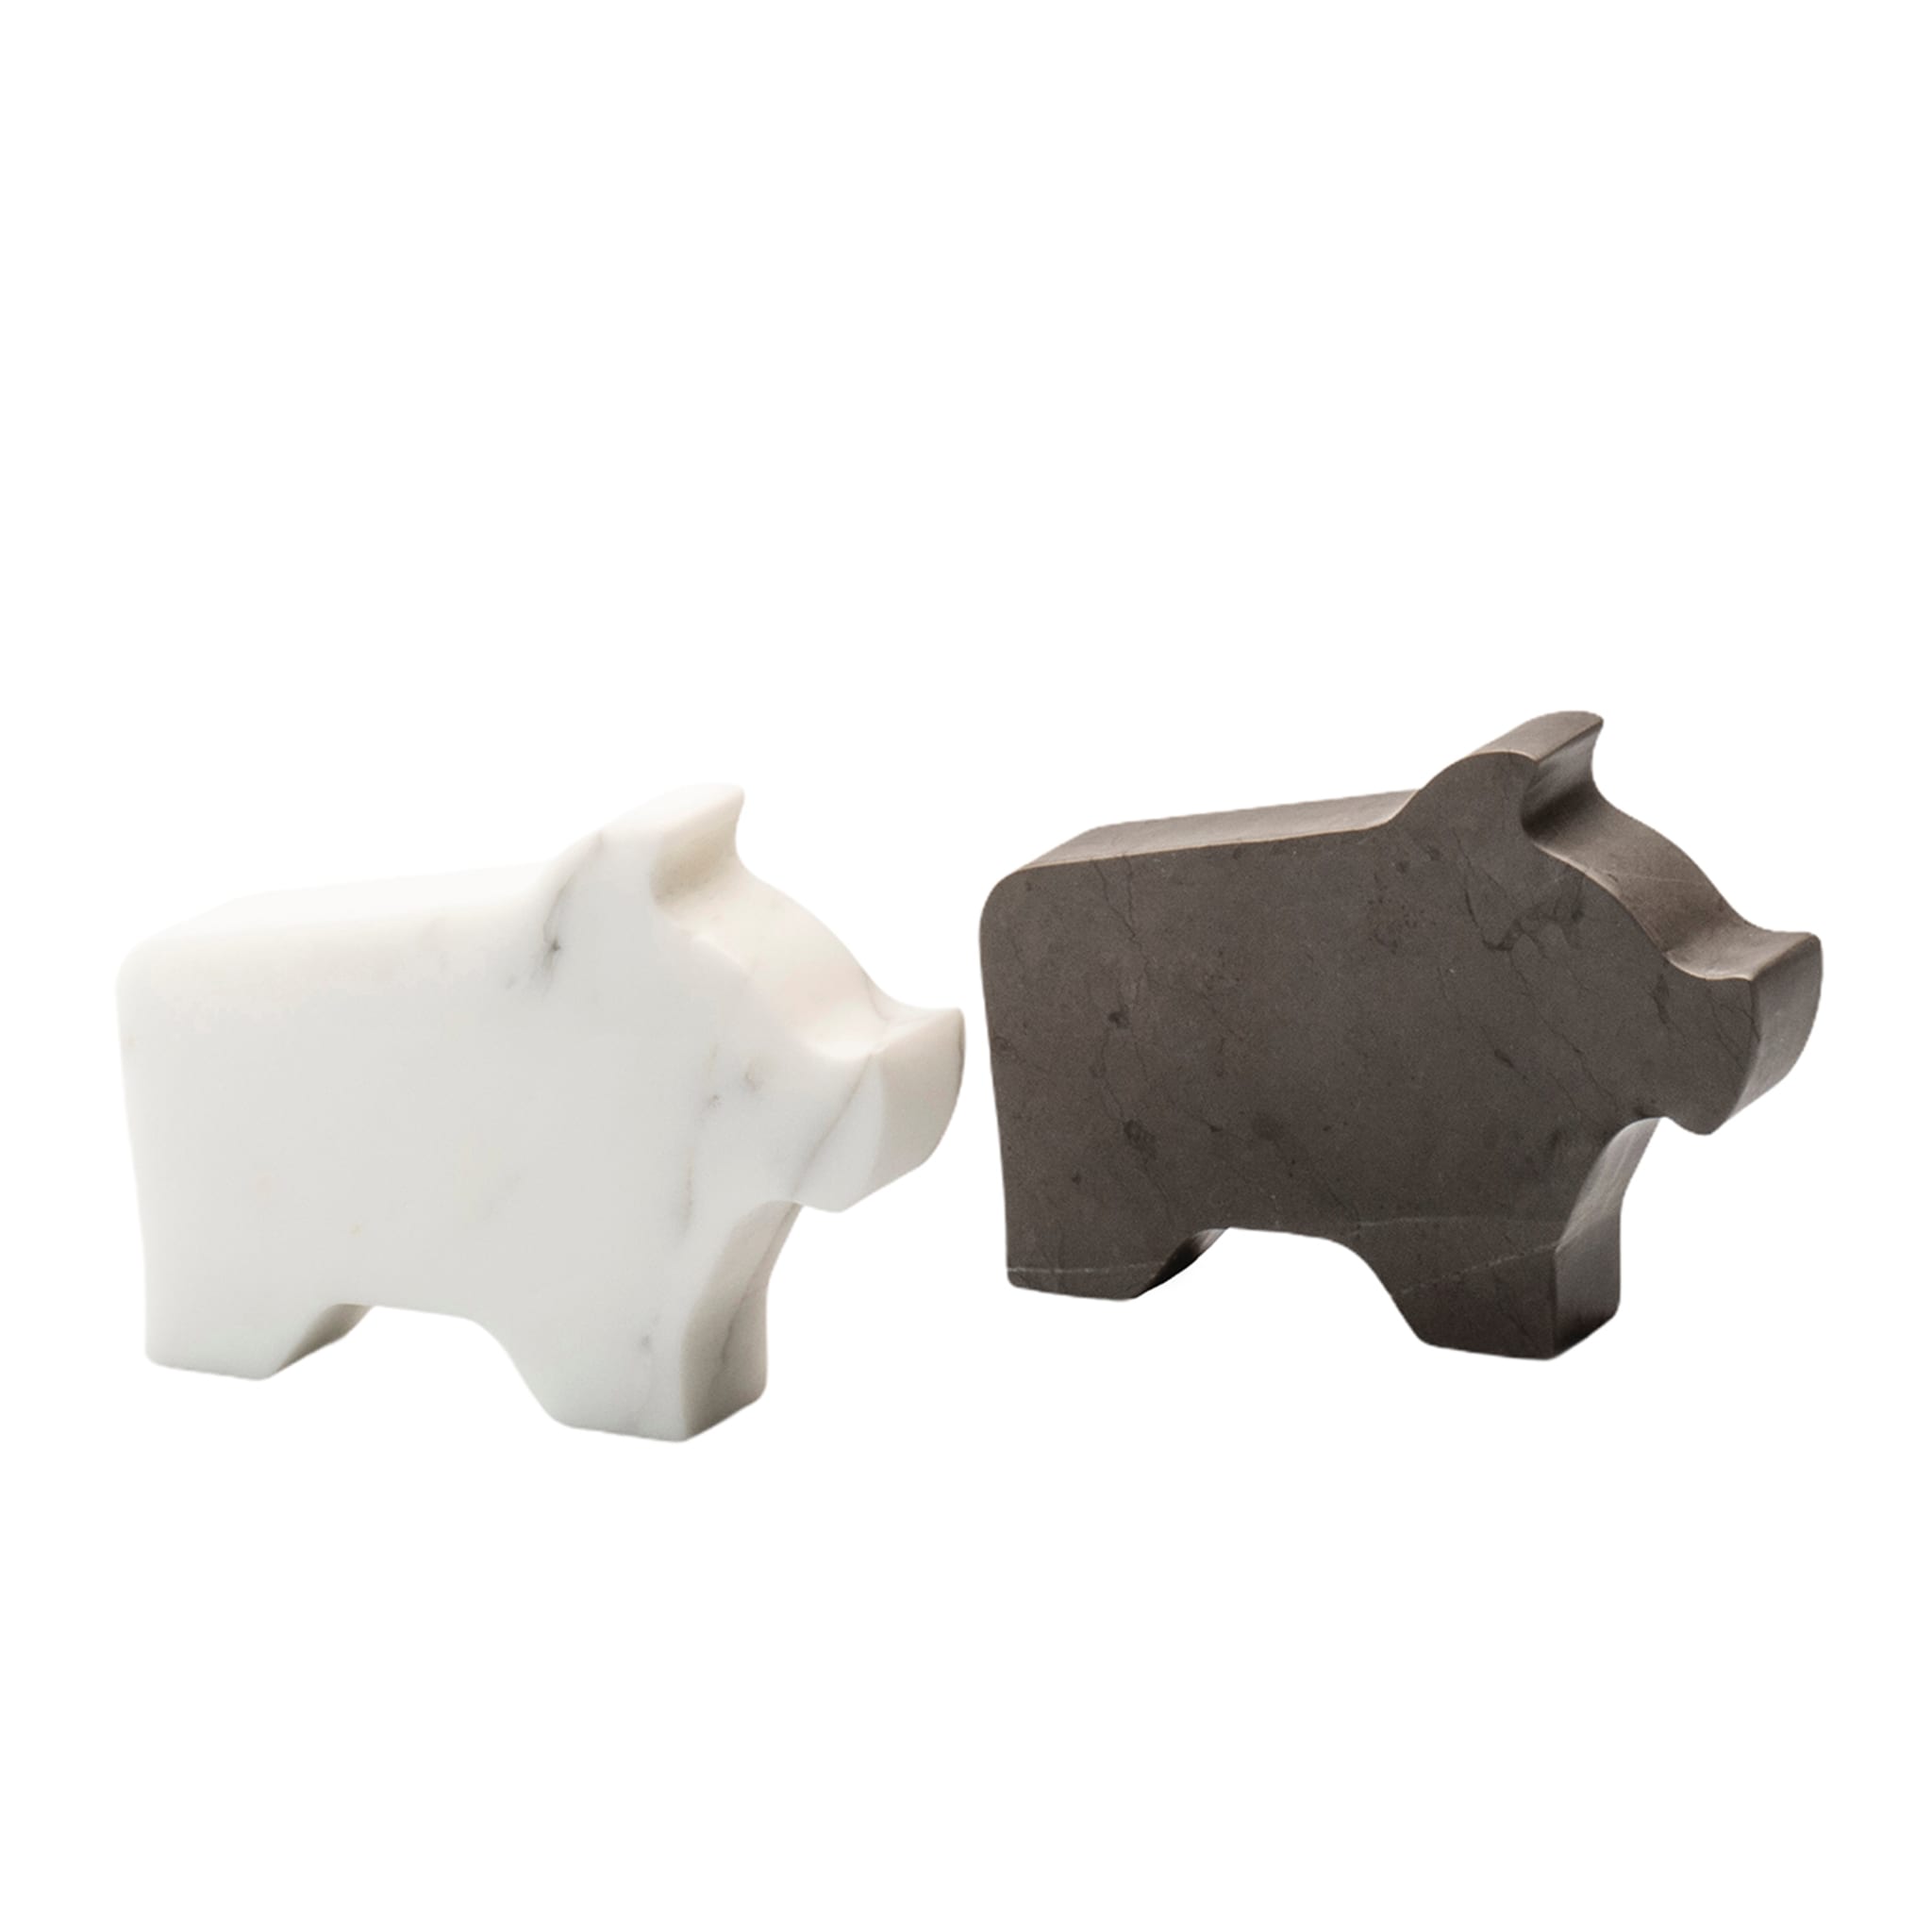 Petite statuette blanche de cochon par Alessandra Grasso - Vue alternative 1